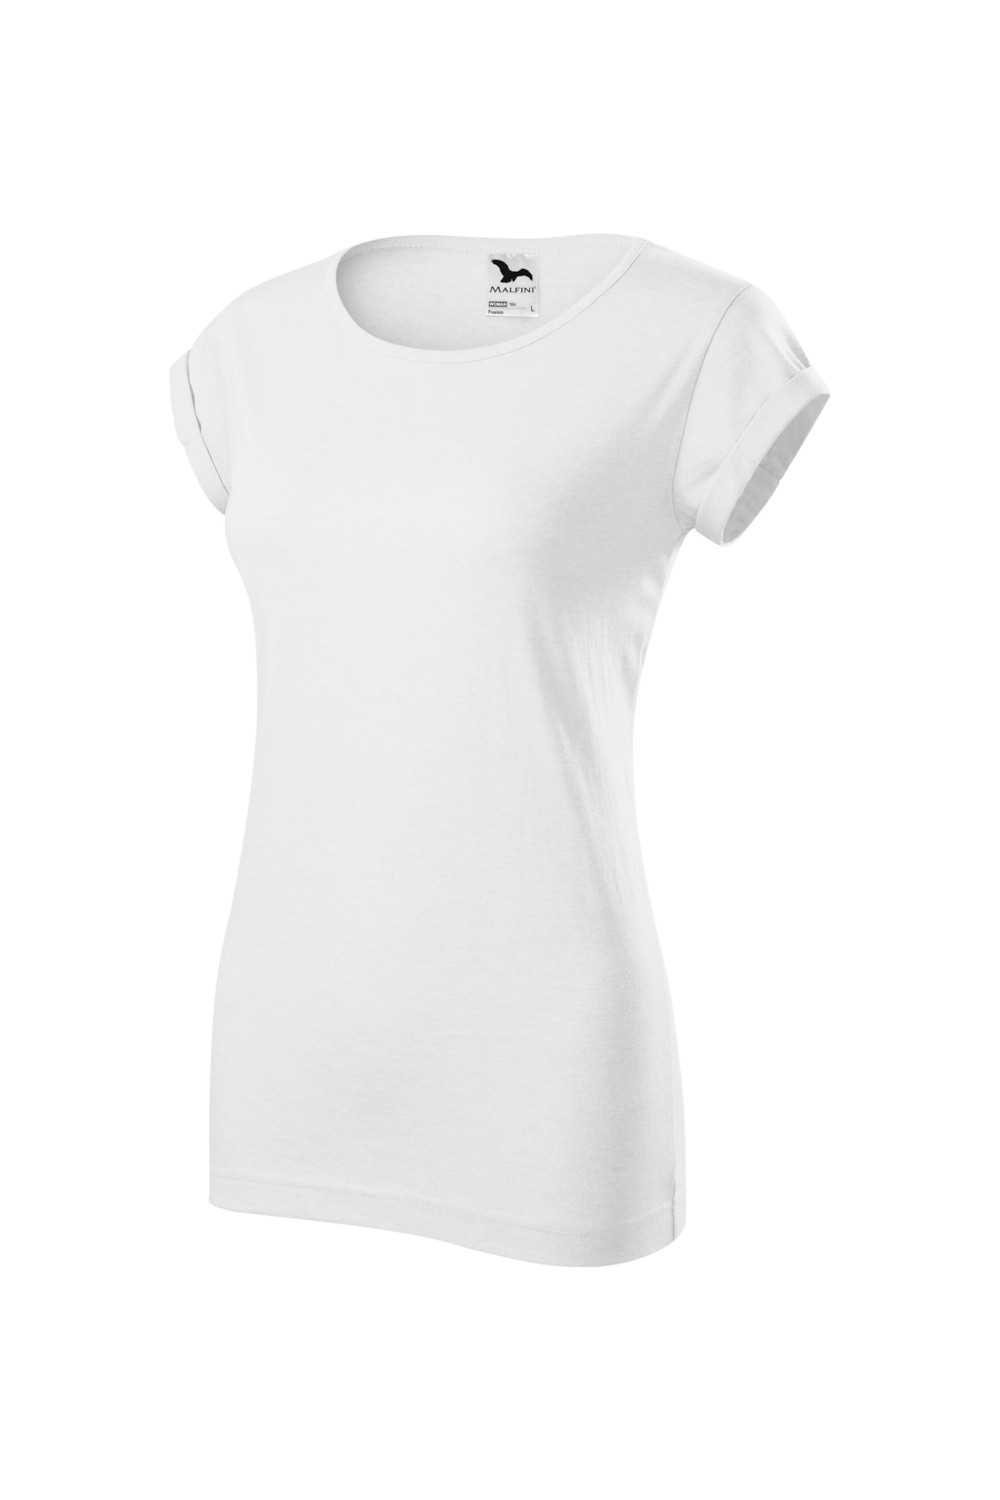 FUSION 164 MALFINI ADLER Koszulka damska melanżowa biały